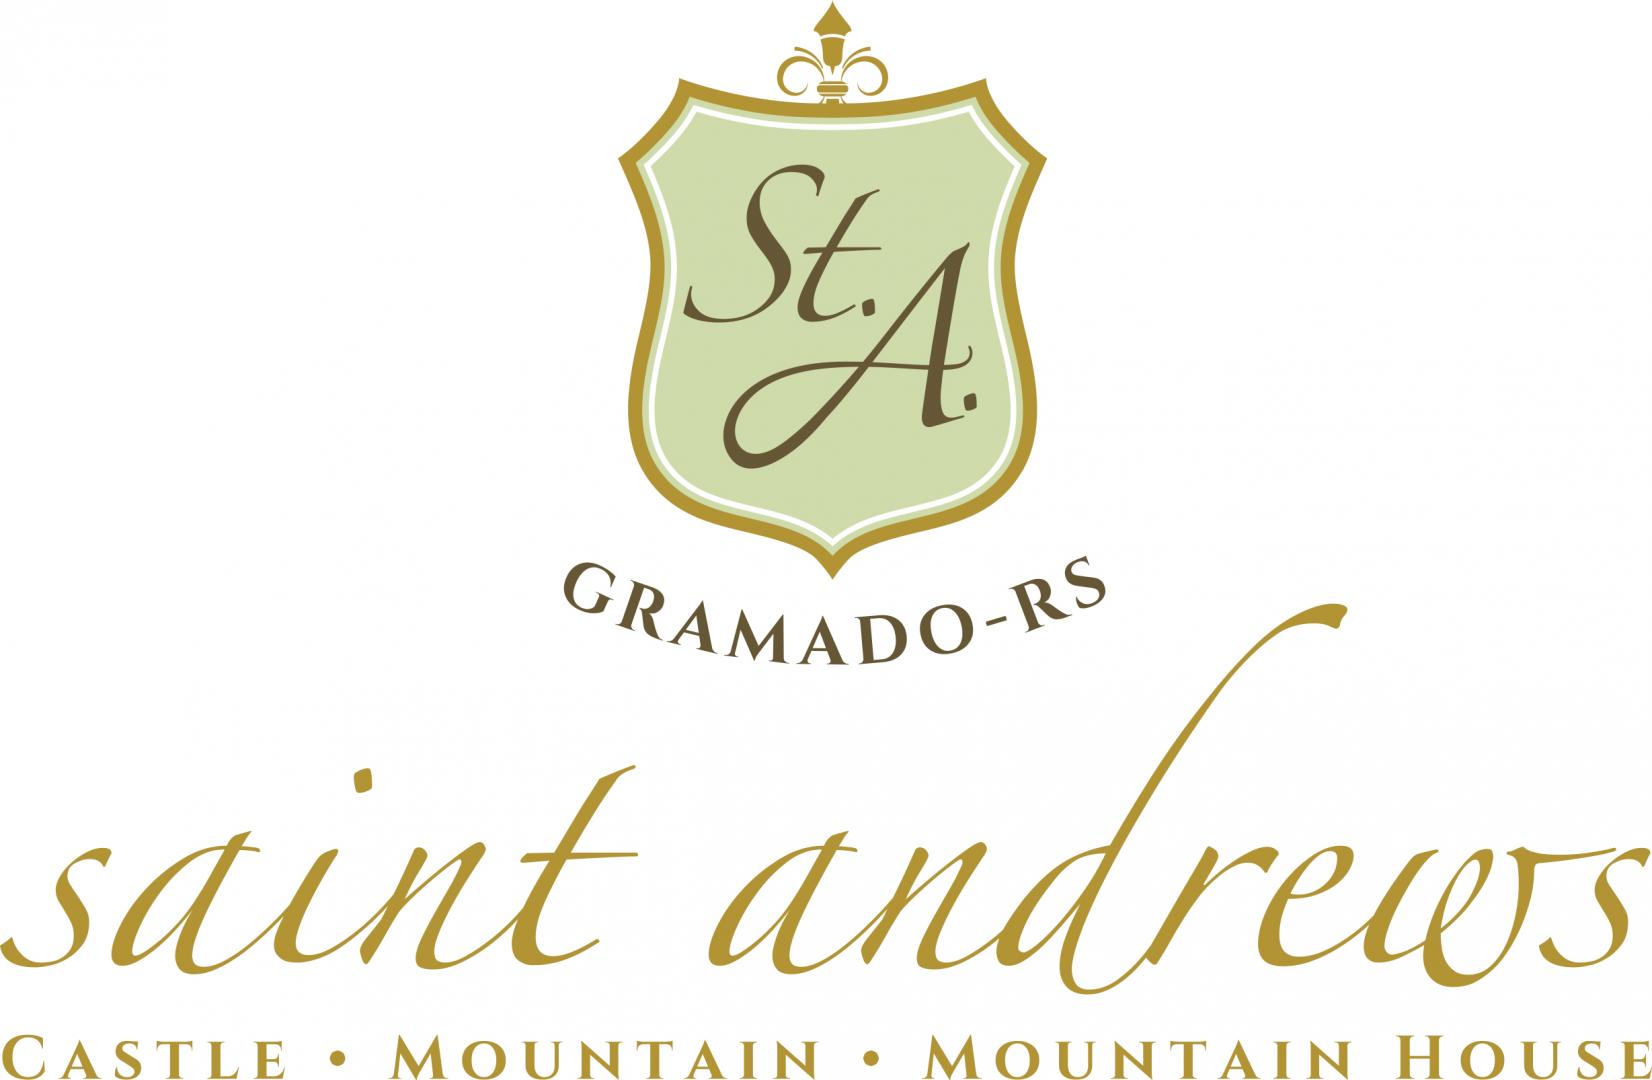 Castelo Saint Andrews - Gramado - RS